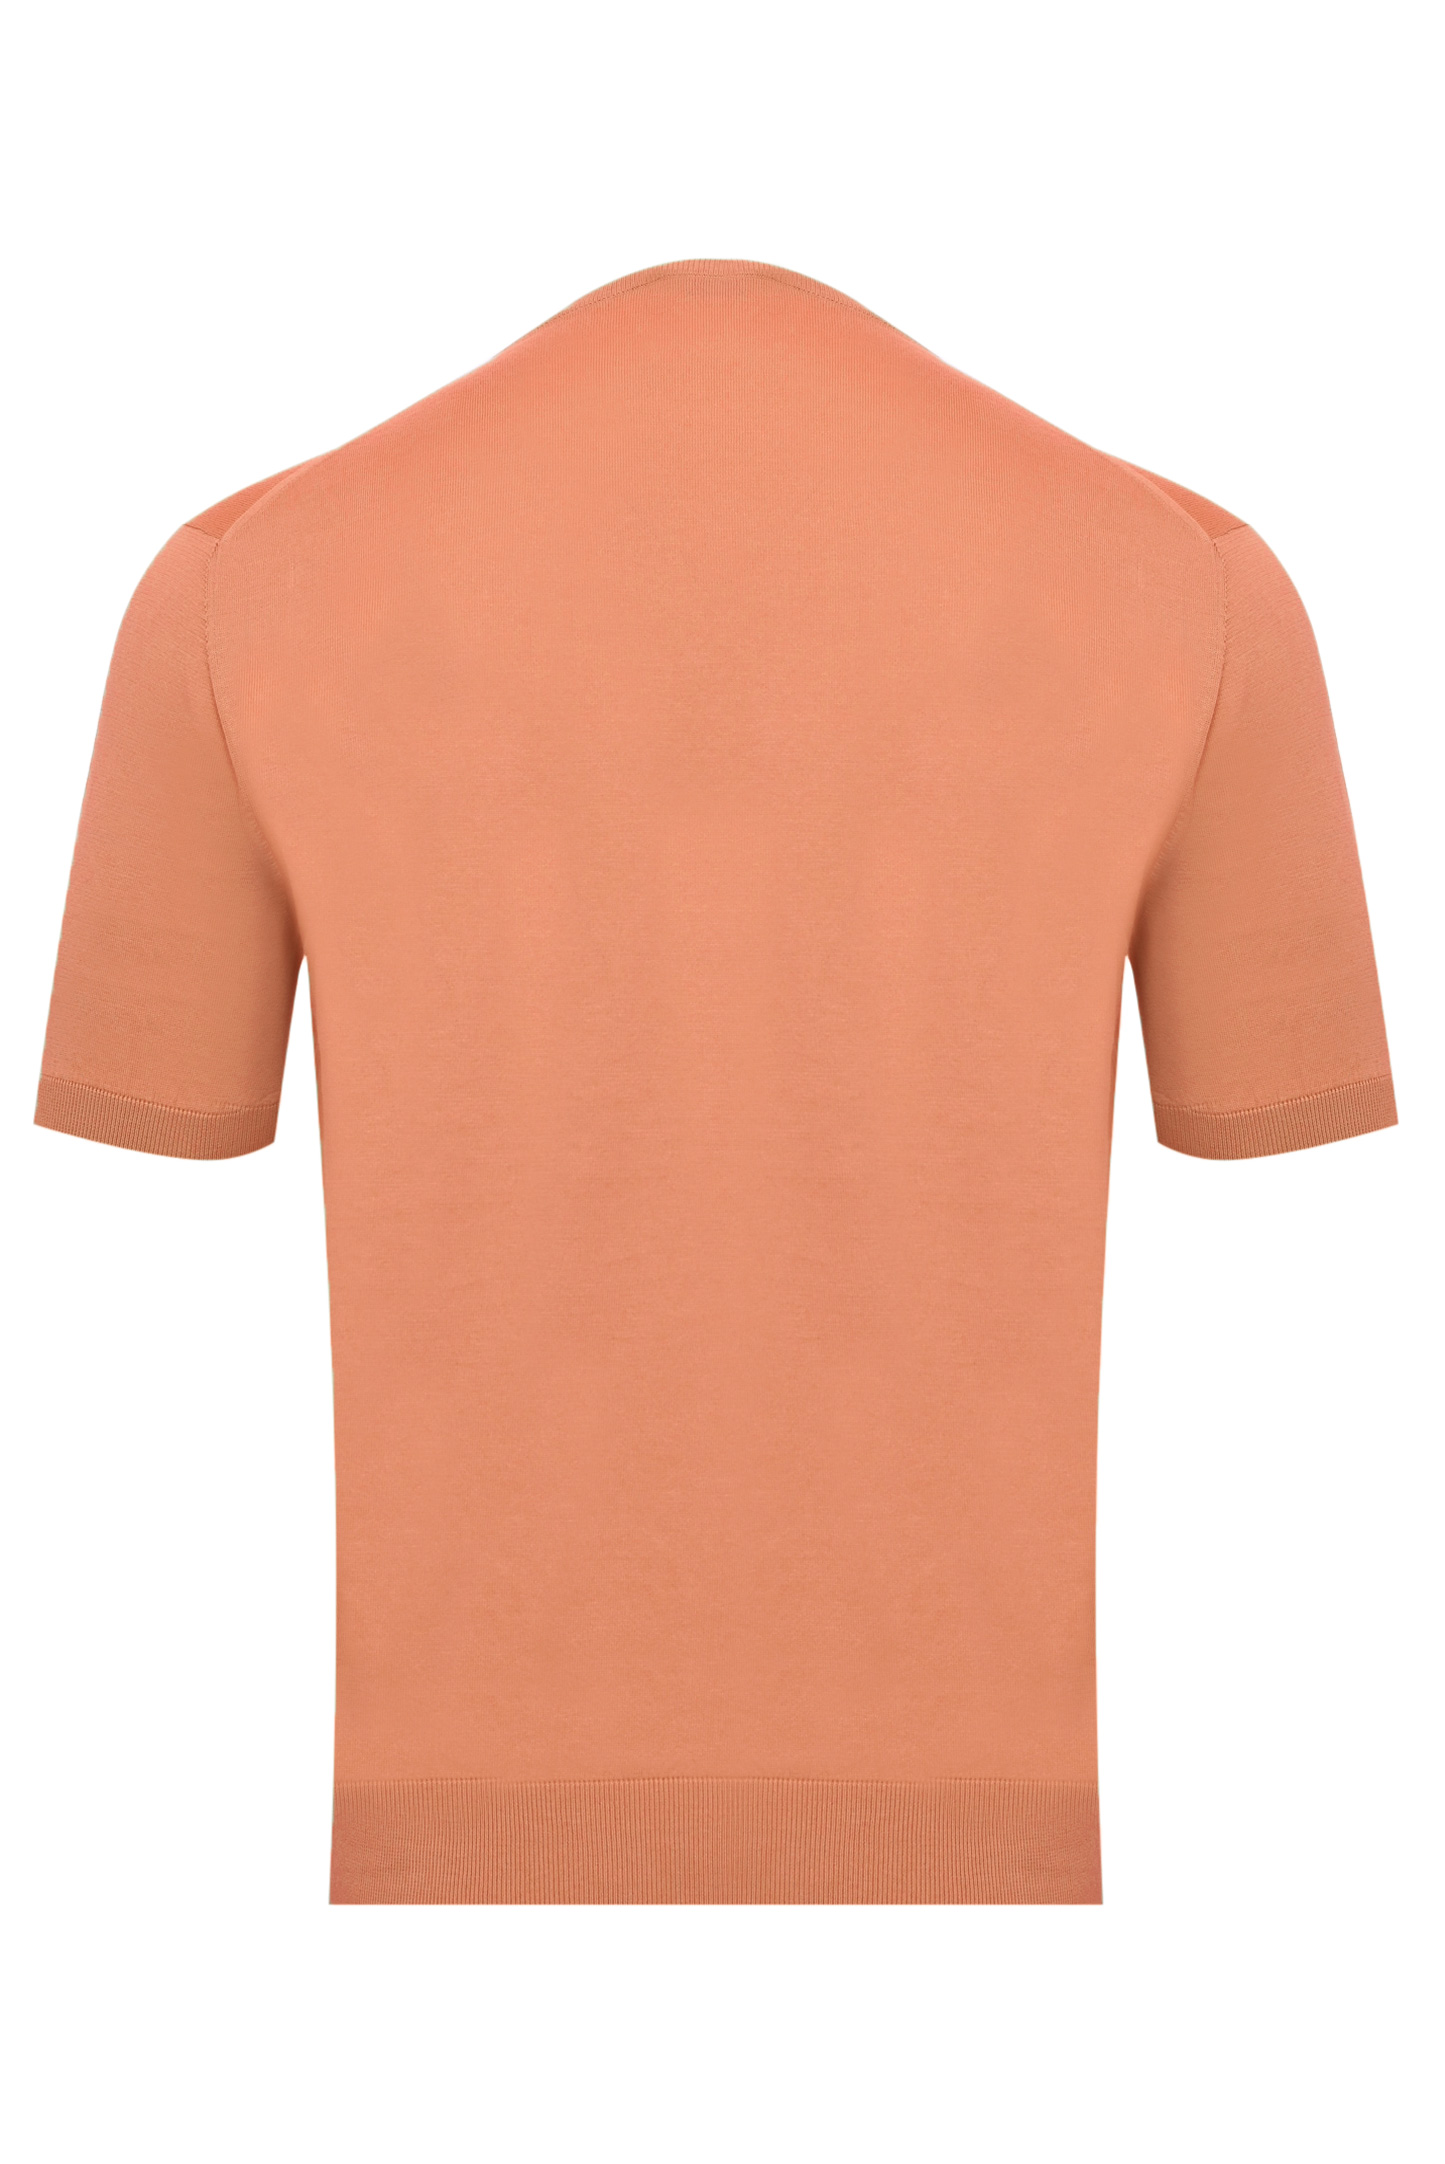 Джемпер STEFANO RICCI K313030G10 F22145, цвет: Оранжевый, Мужской